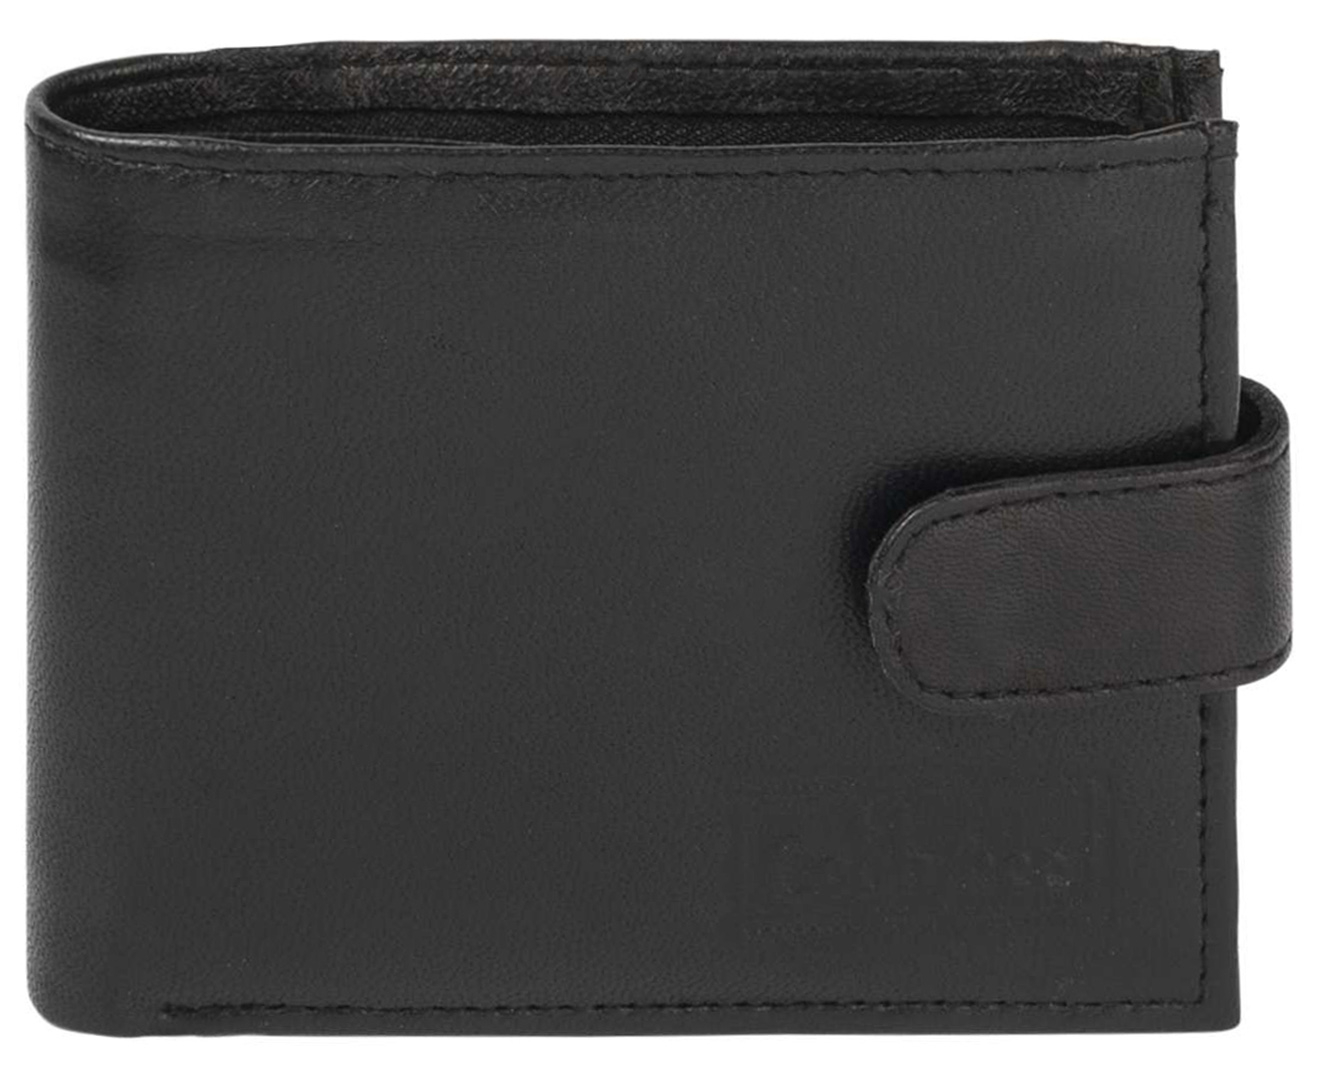 Cobb & Co. Lewis RFID Goat Leather Wallet - Black | Catch.co.nz